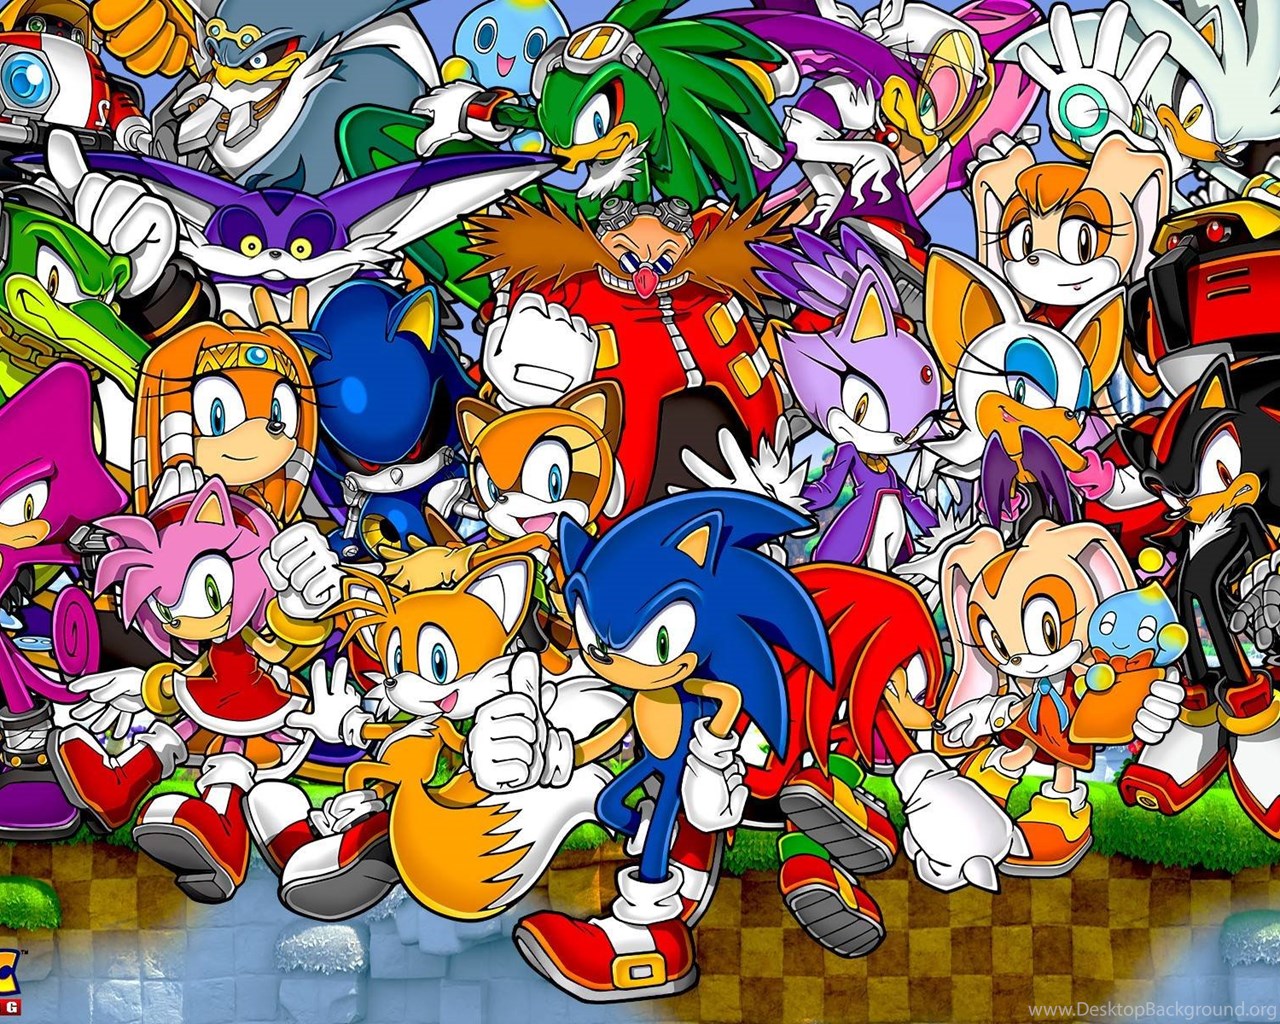 Download Sonic The Hedgehog Wallpapers 2015 Wallpapers Cave Fullscreen Stan...